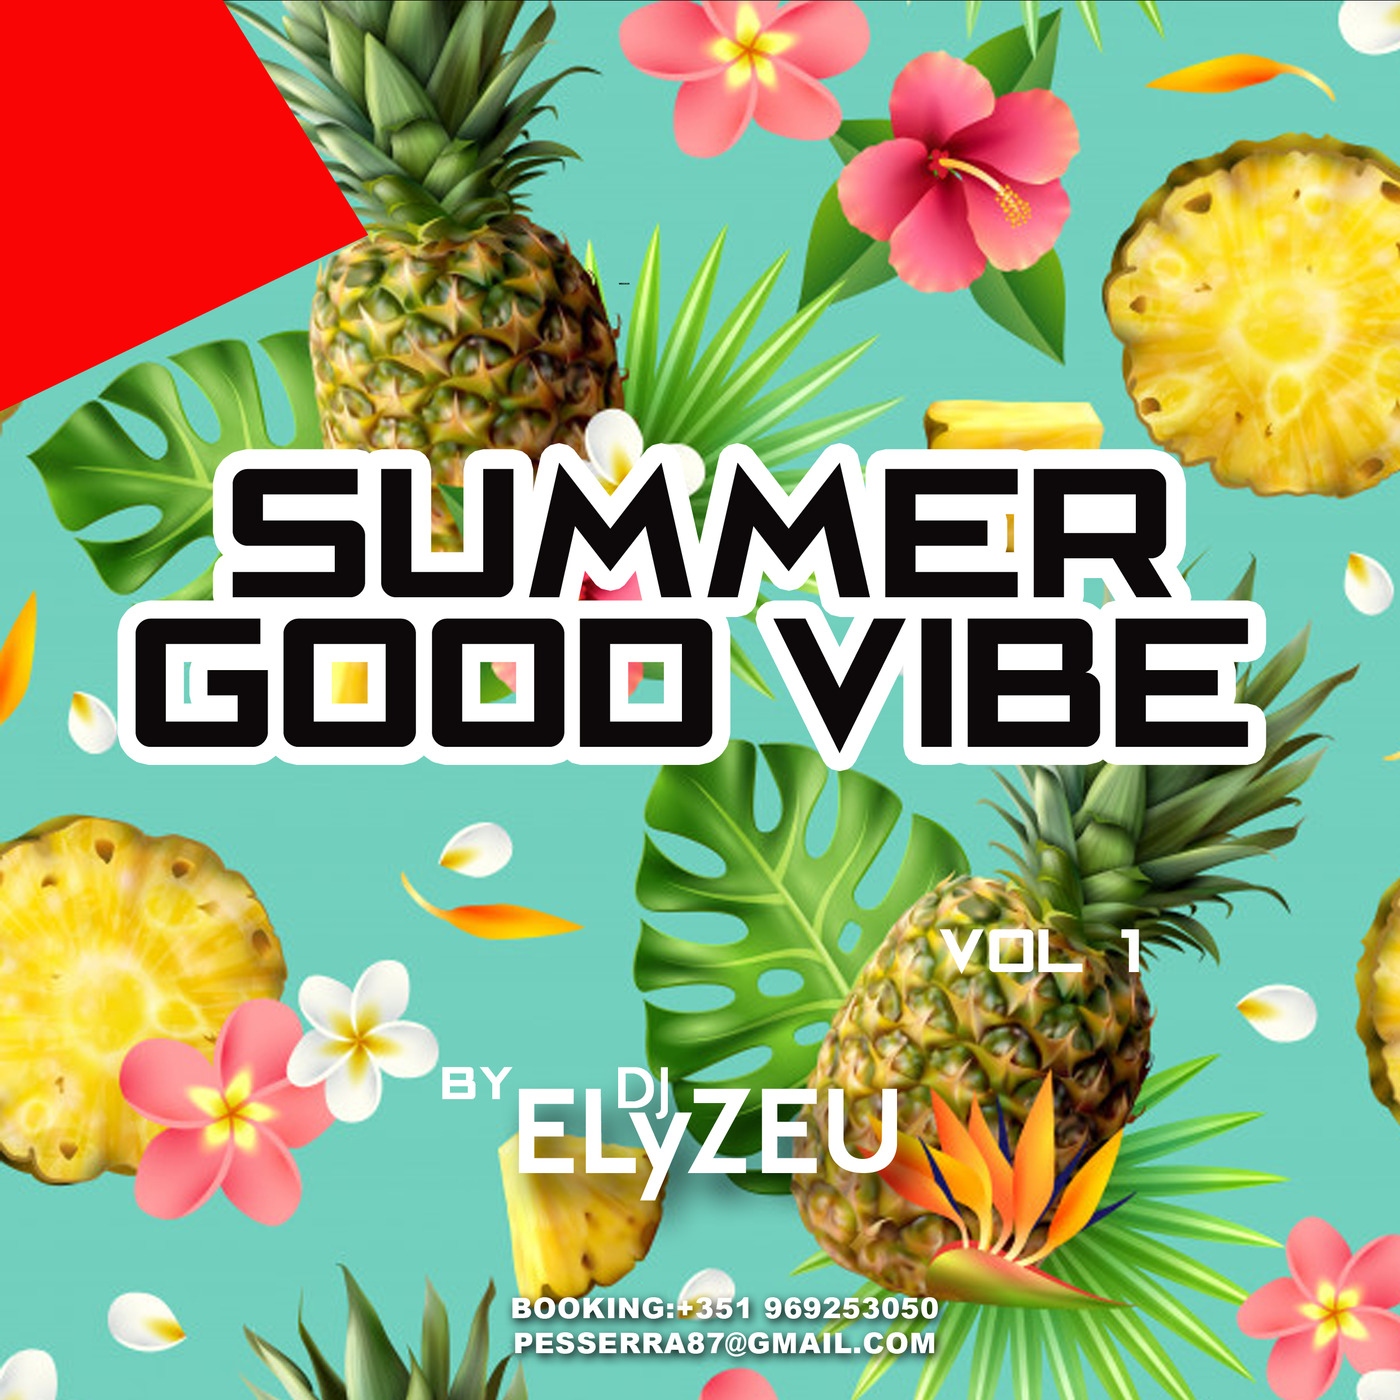 SUMMER GOOD VIBE VOL 1 BY DJ ELYZEU